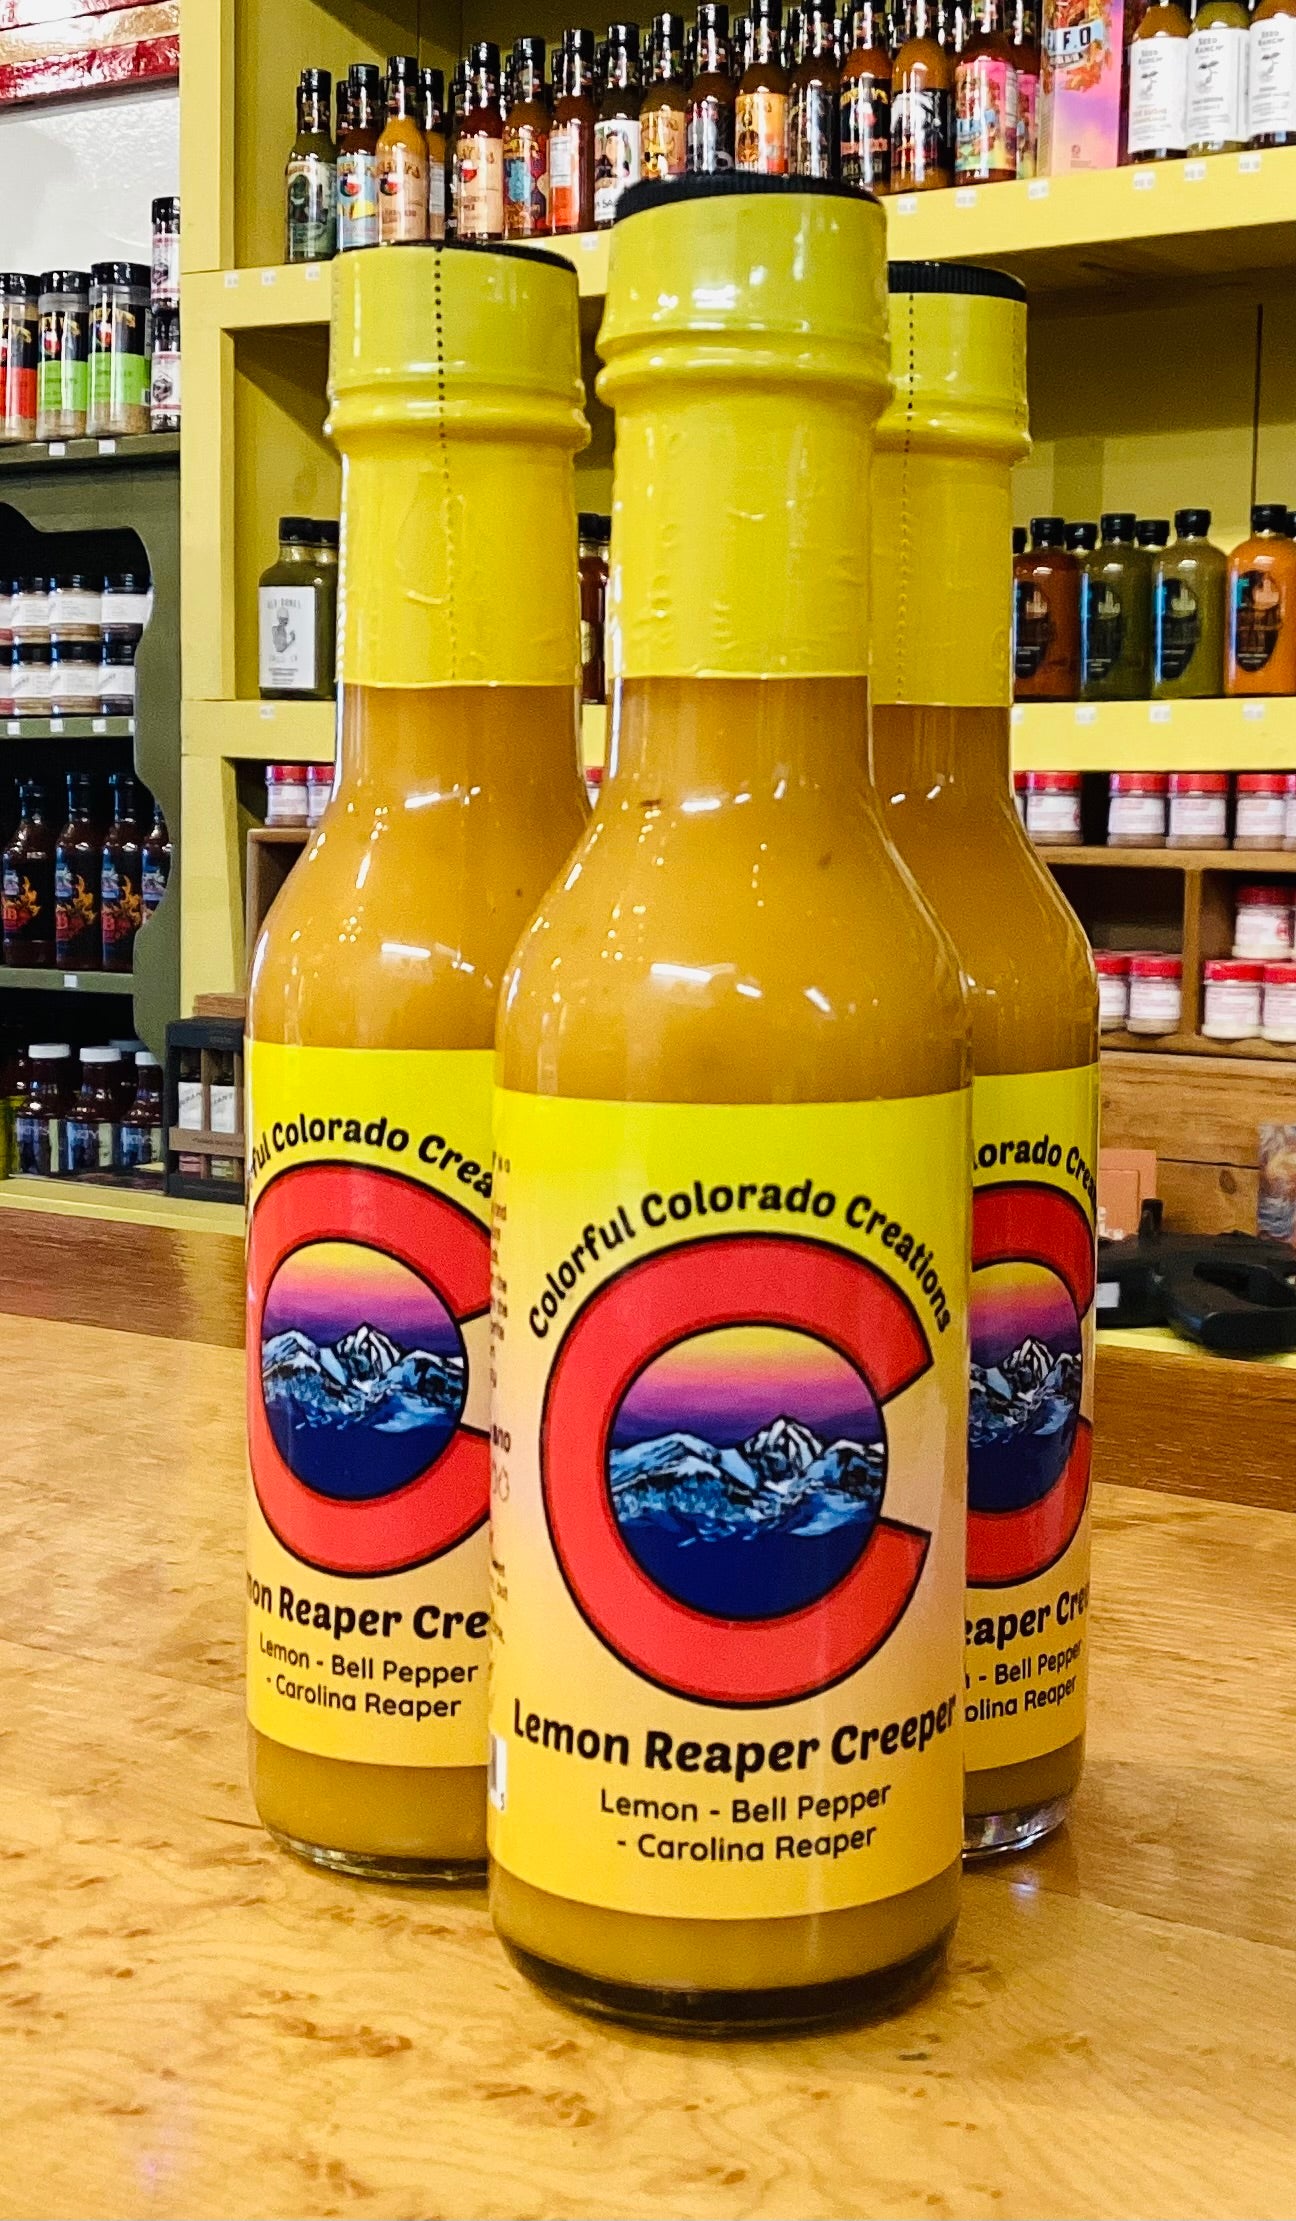 Colorful Colorado Creations Lemon Reaper Creeper Hot Sauce